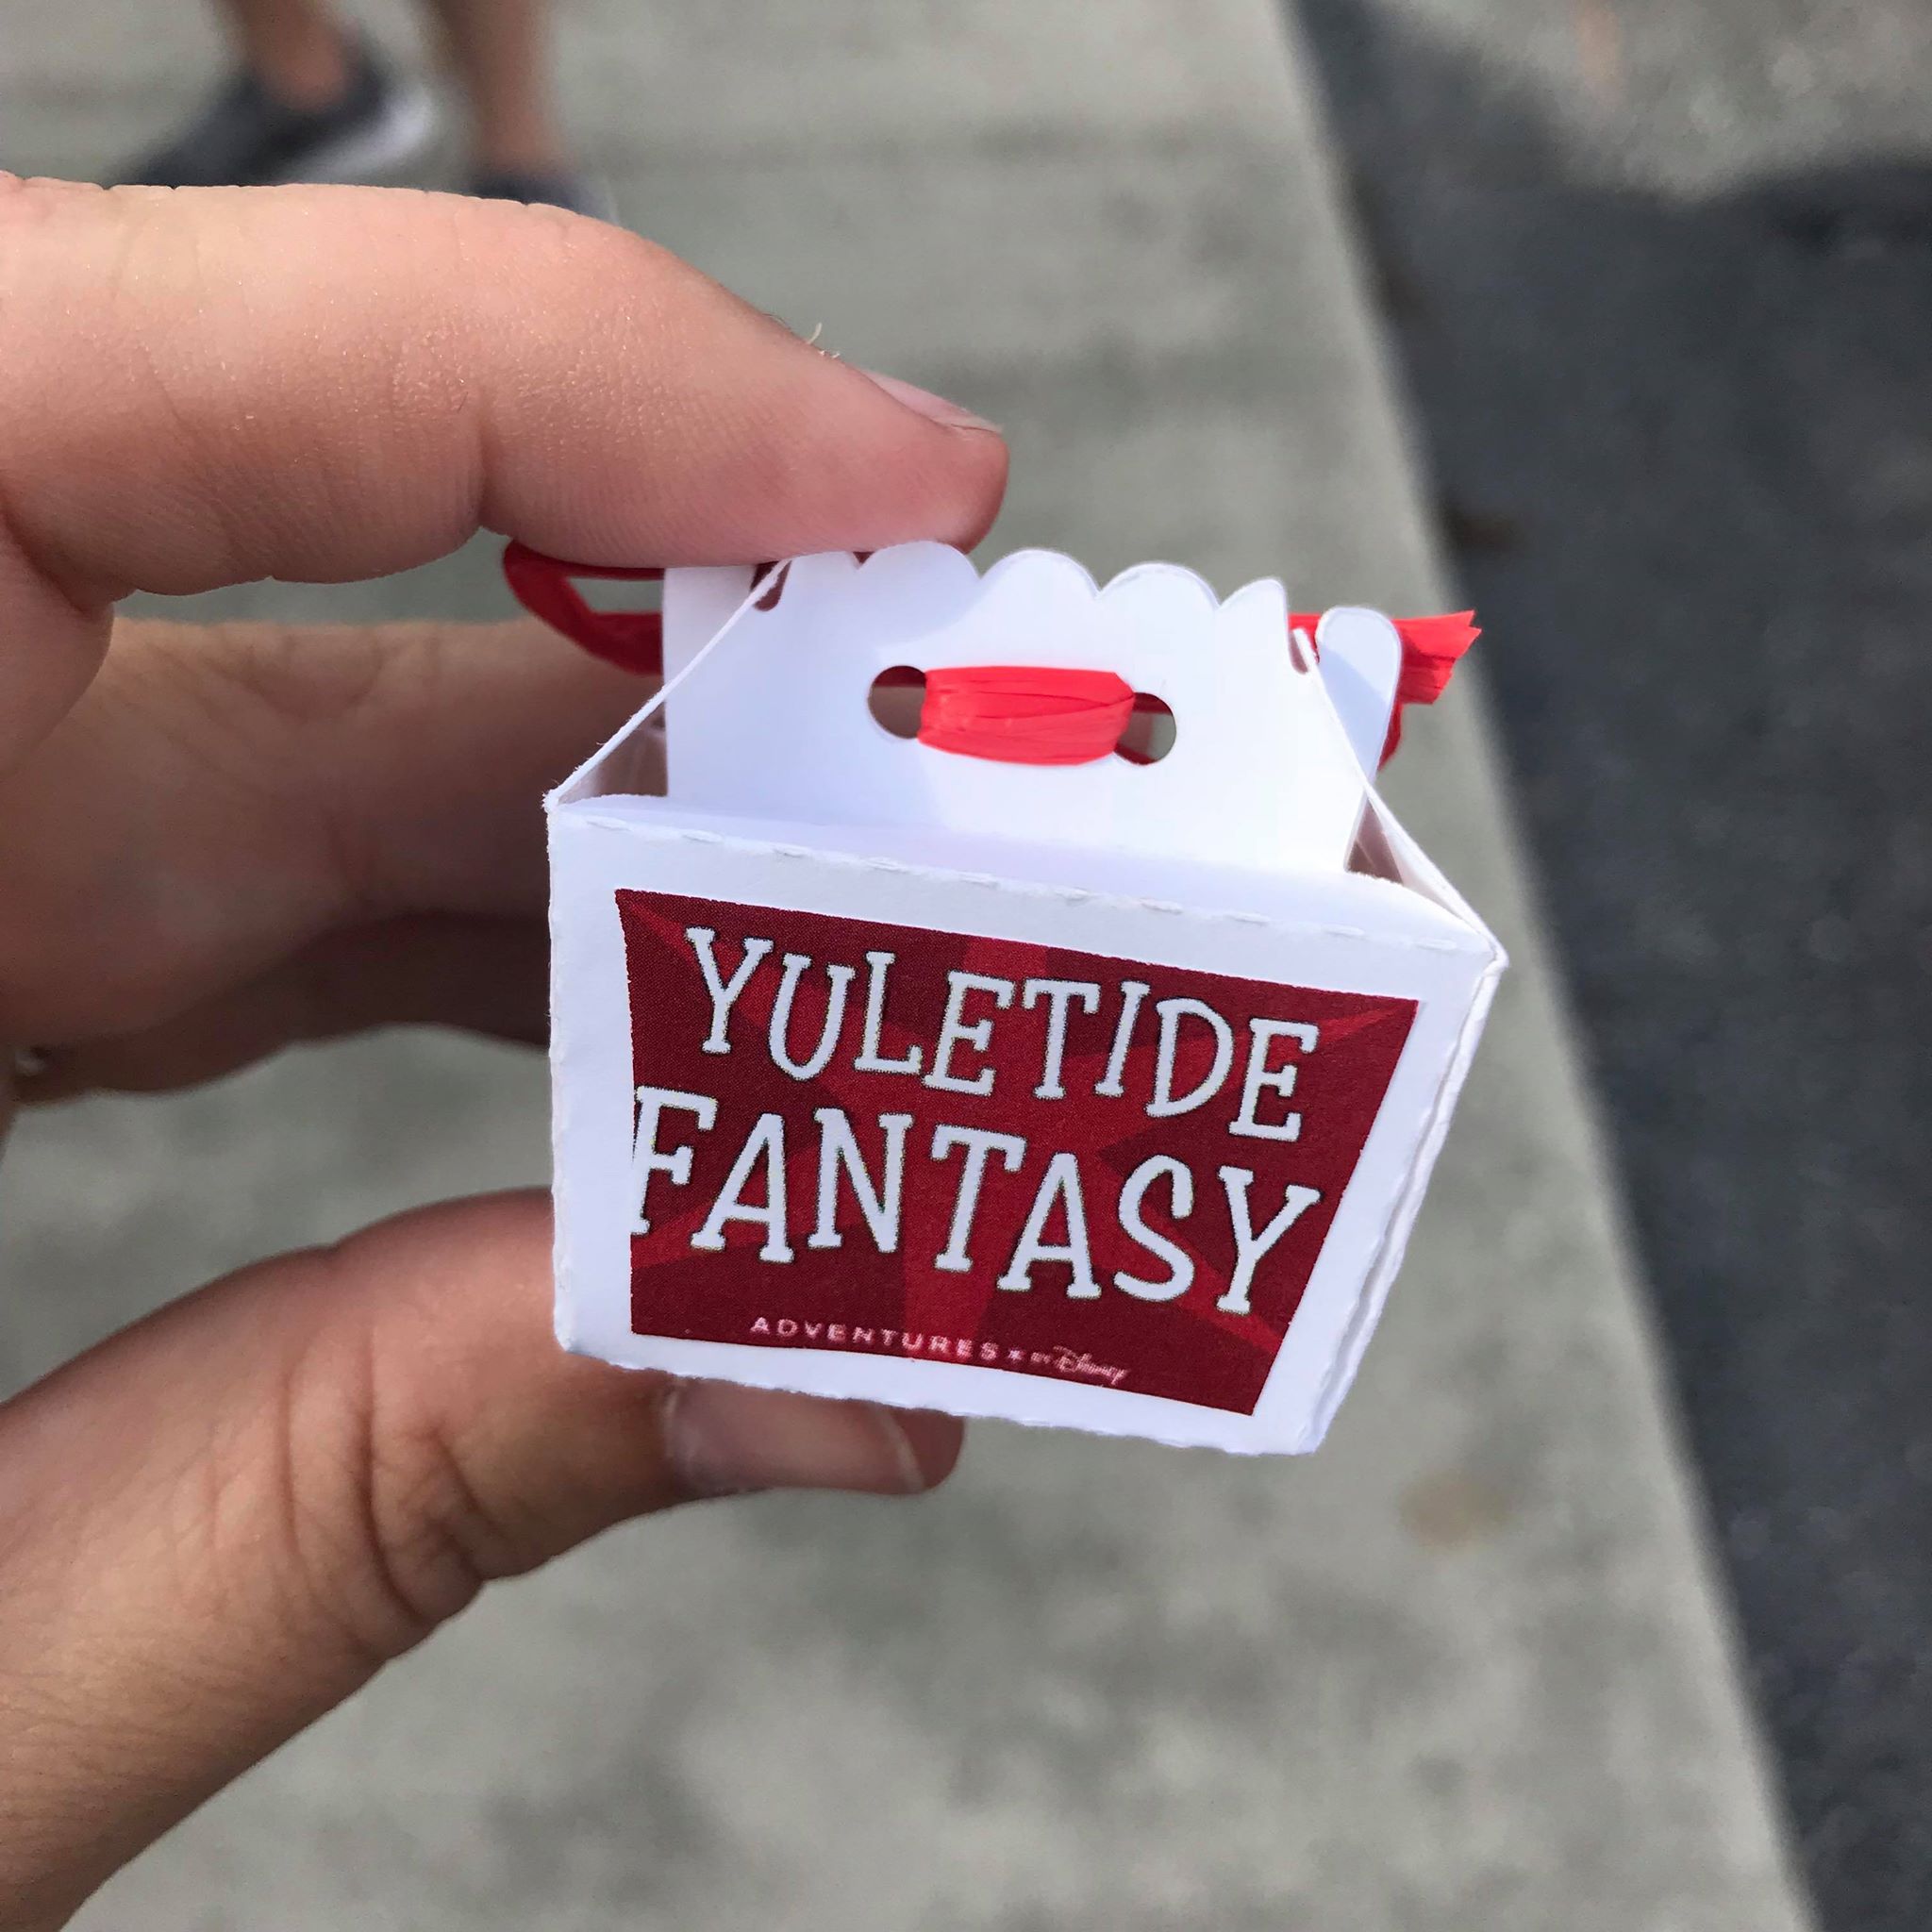 Disney's Yuletide Fantasy Tour